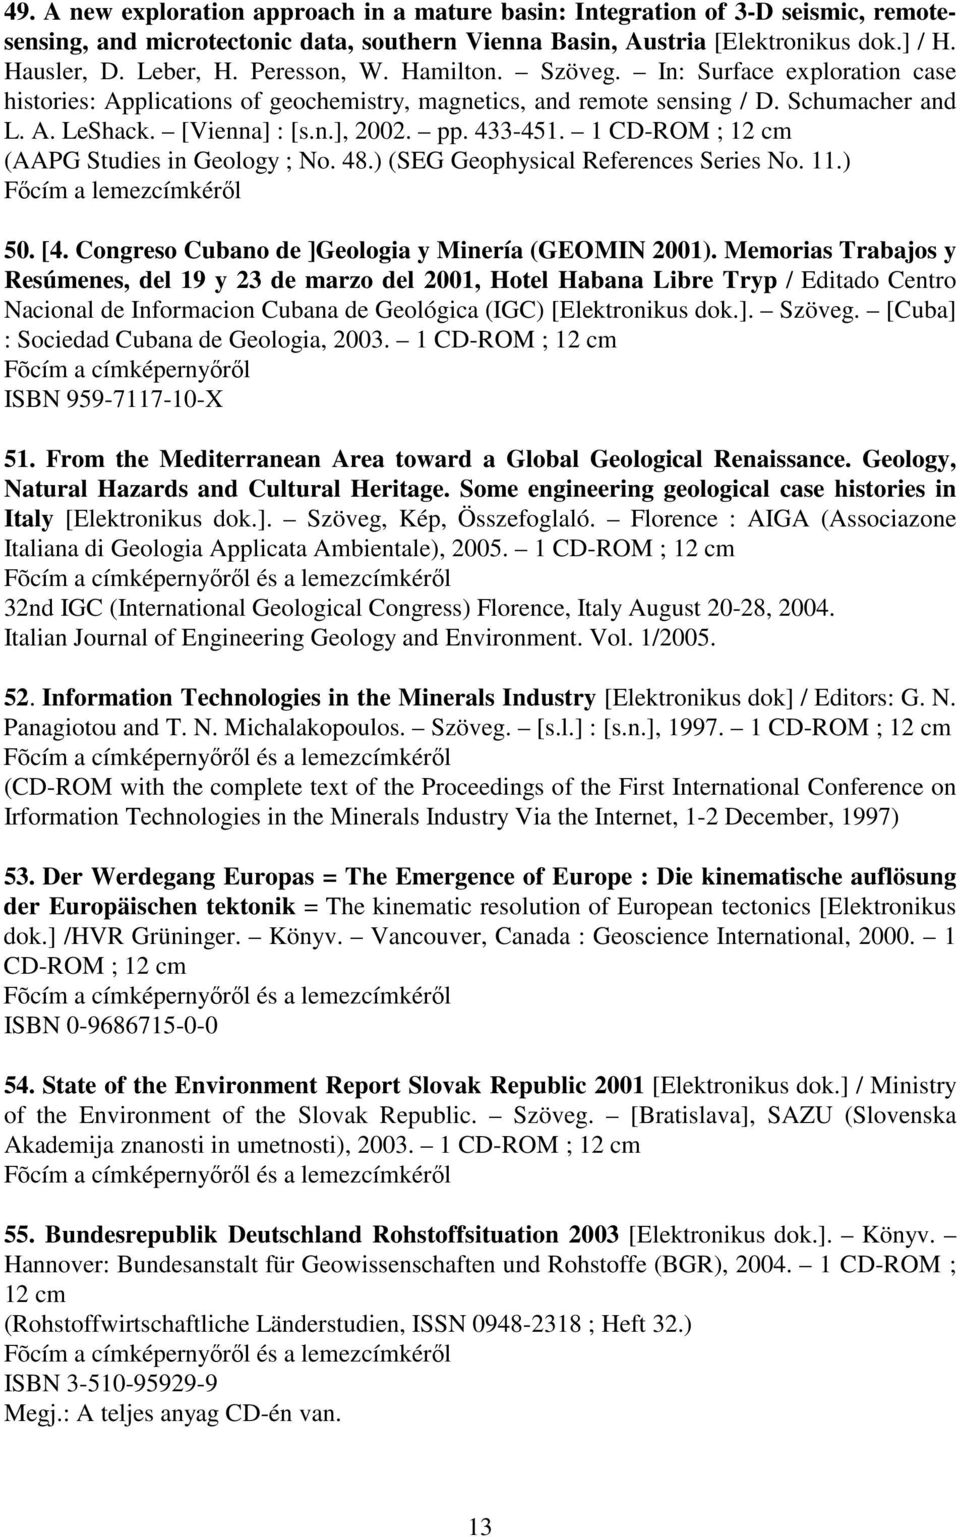 433-451. 1 CD-ROM ; 12 cm (AAPG Studies in Geology ; No. 48.) (SEG Geophysical References Series No. 11.) Fıcím a lemezcímkérıl 50. [4. Congreso Cubano de ]Geologia y Minería (GEOMIN 2001).